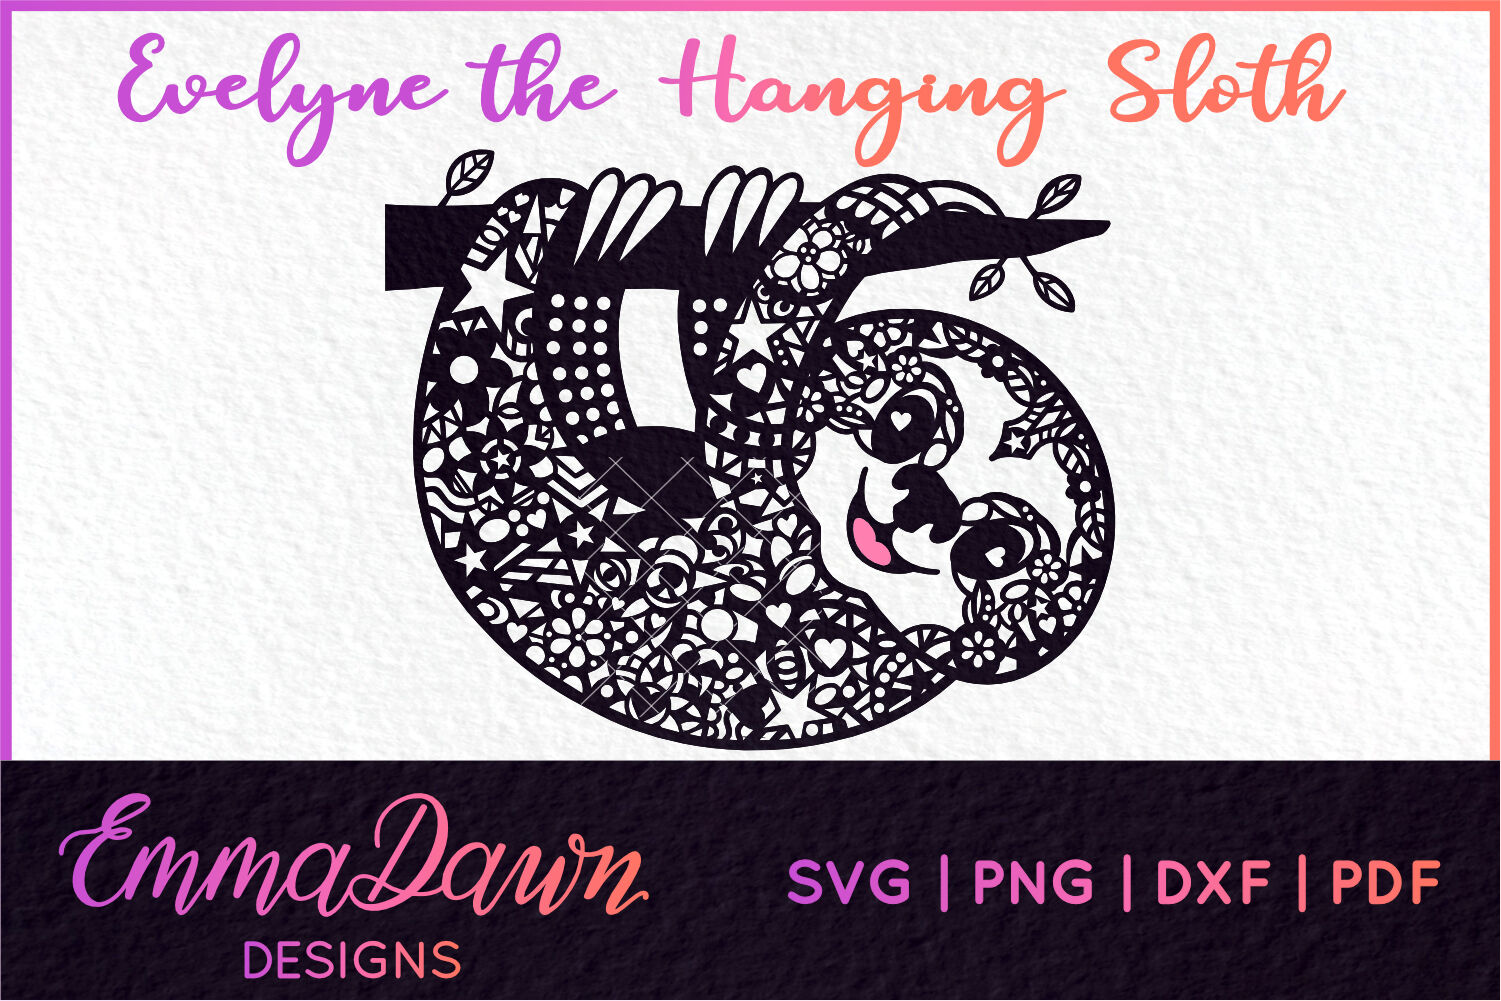 Download Evelyne The Hanging Sloth Mandala Zentangle Design Svg By Emma Dawn Designs Thehungryjpeg Com